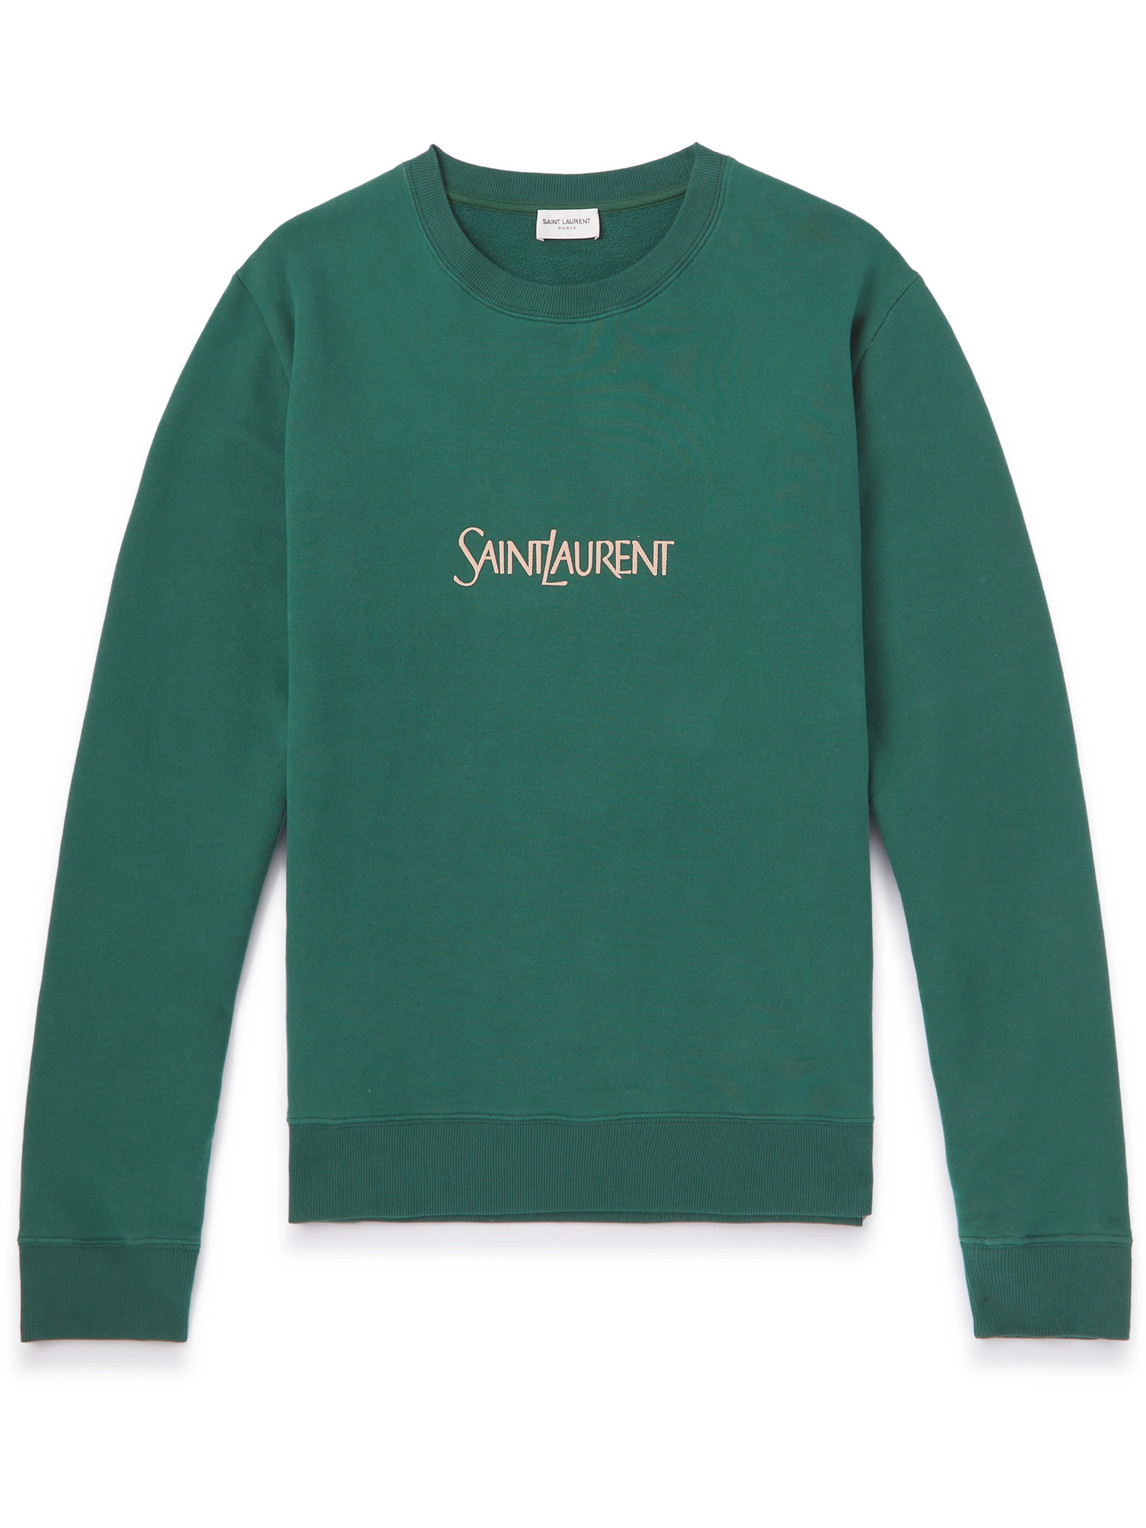 SAINT LAURENT - Logo-Print Cotton-Jersey Sweatshirt - Men - Green - XL von SAINT LAURENT